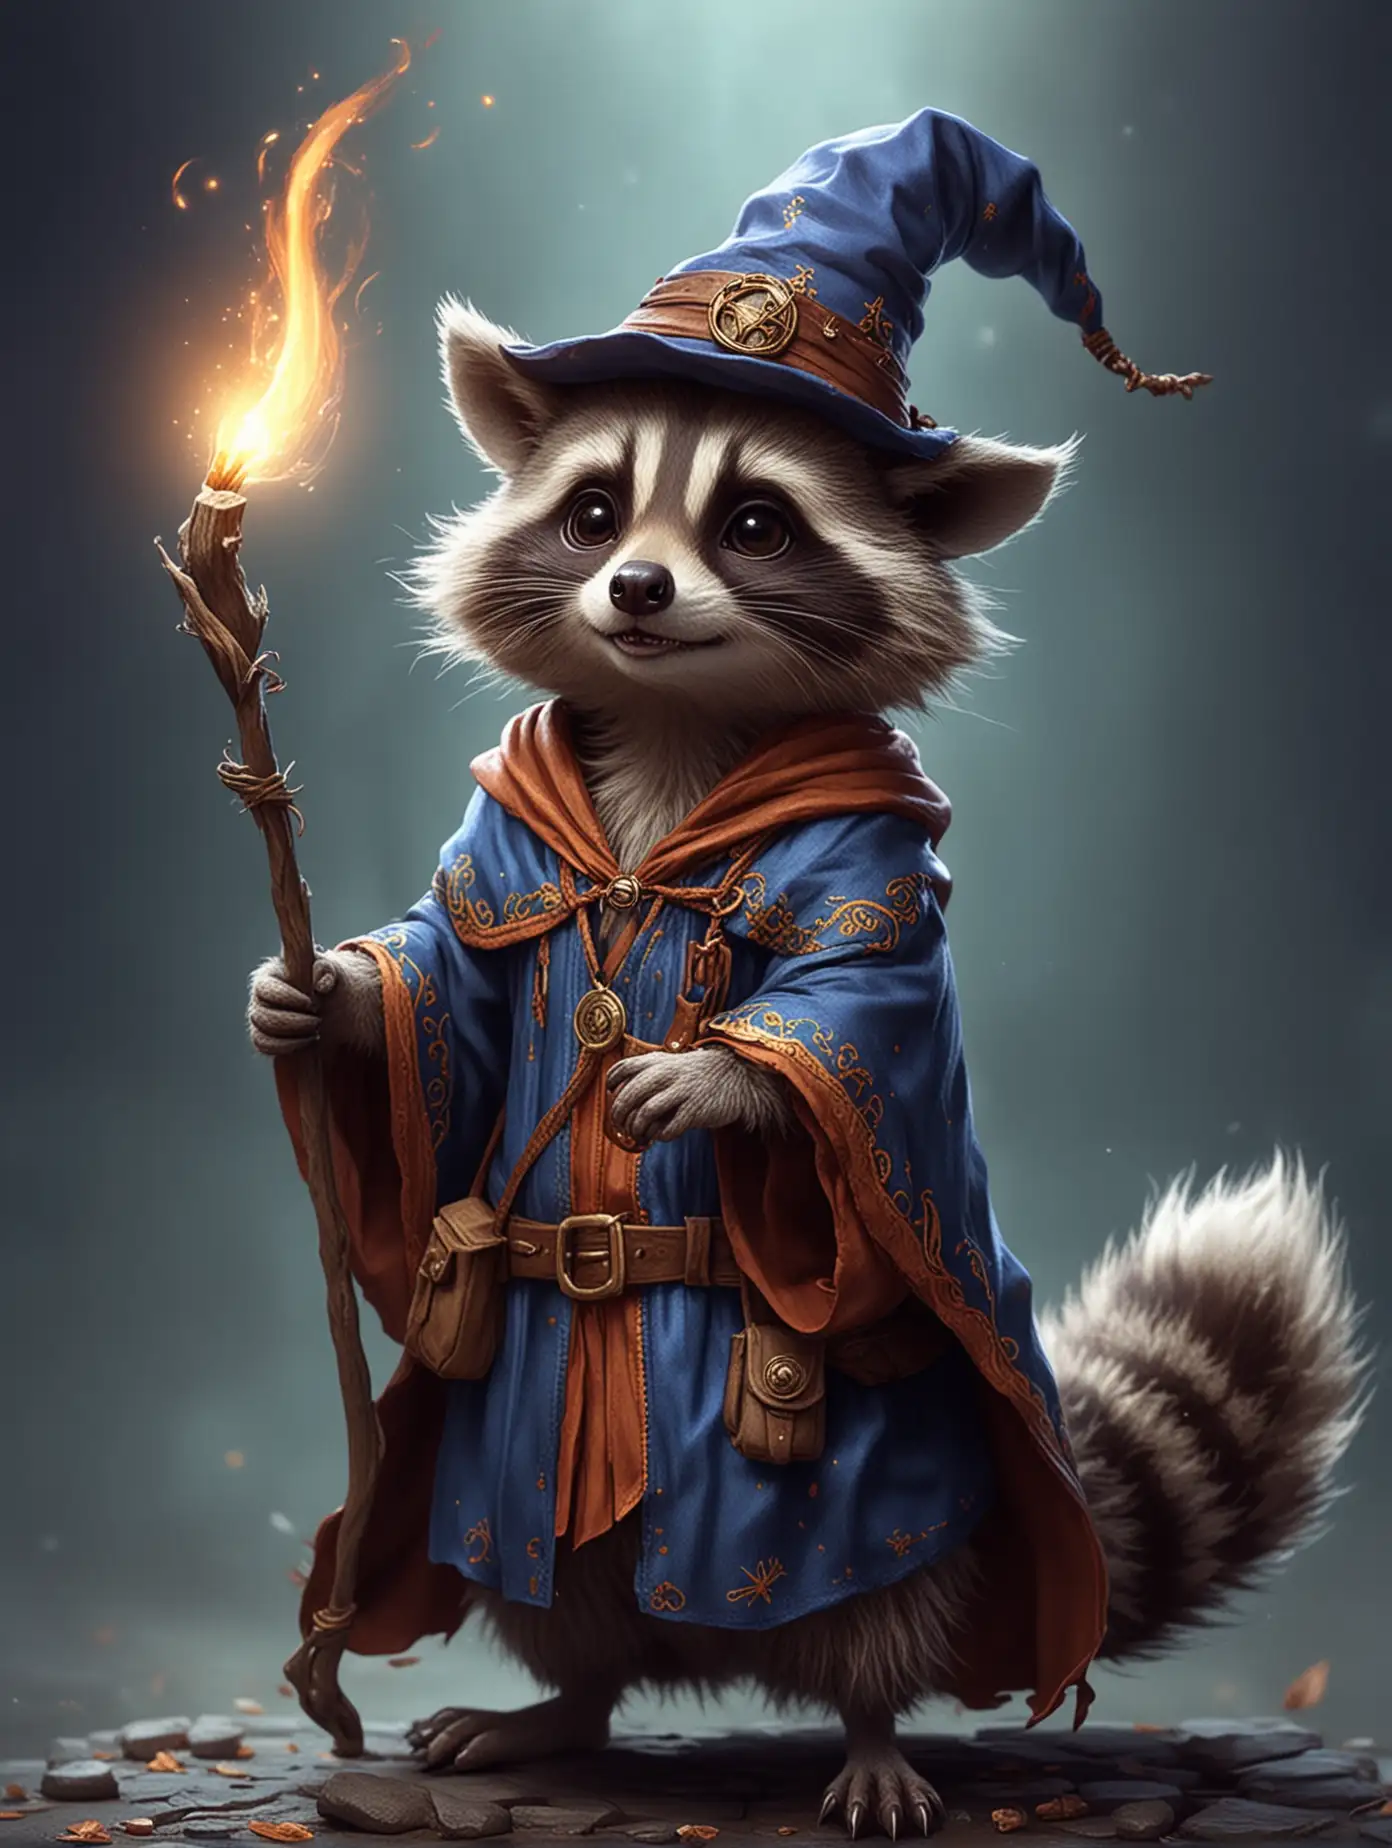 A cute furry racoon wizard 